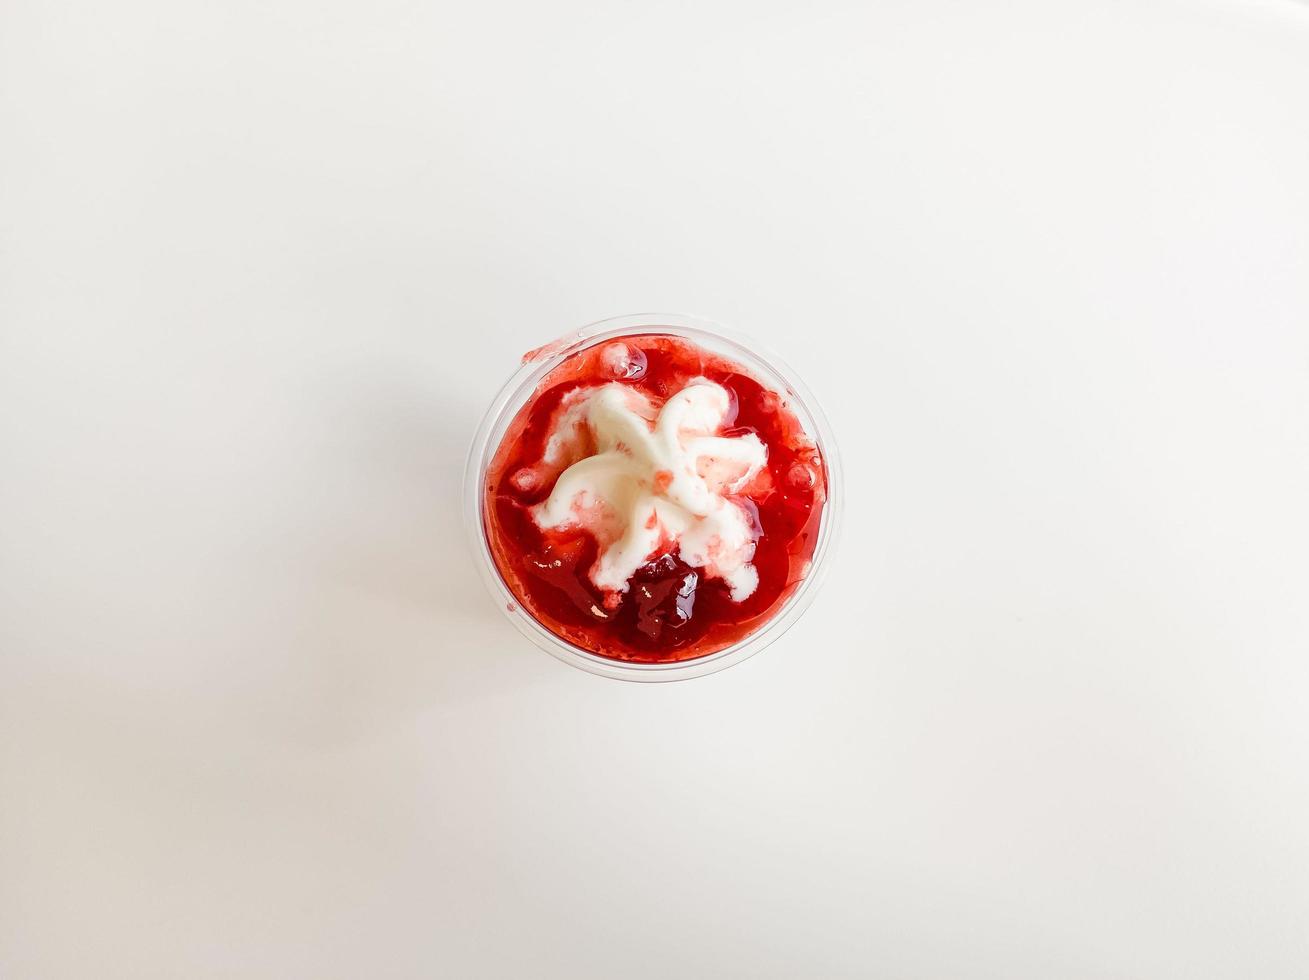 cubierta de helado de salsa de fresa. foto